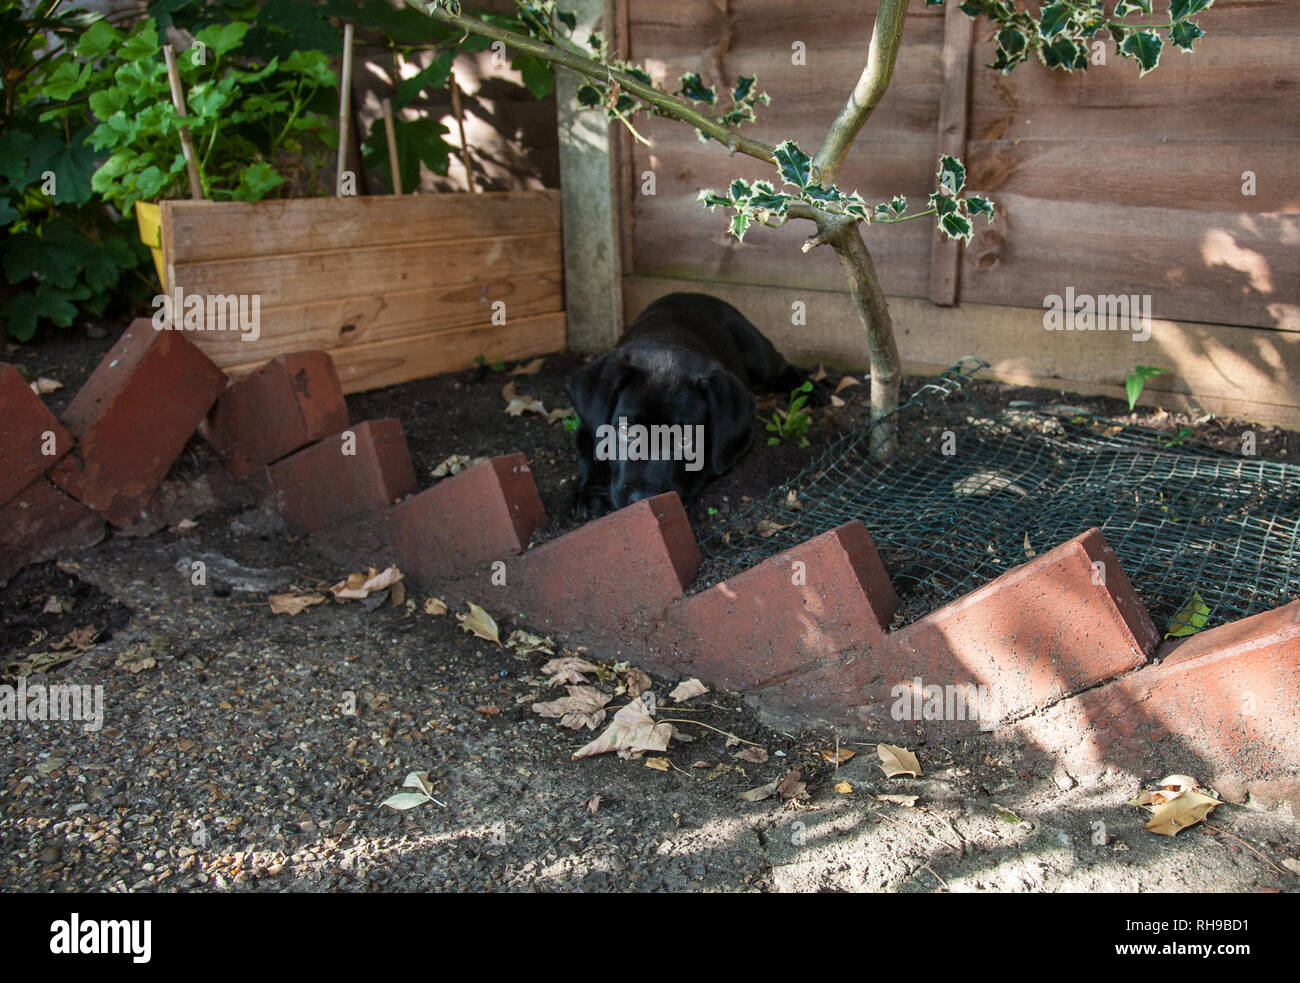 Black Labrador puppy Stock Photo